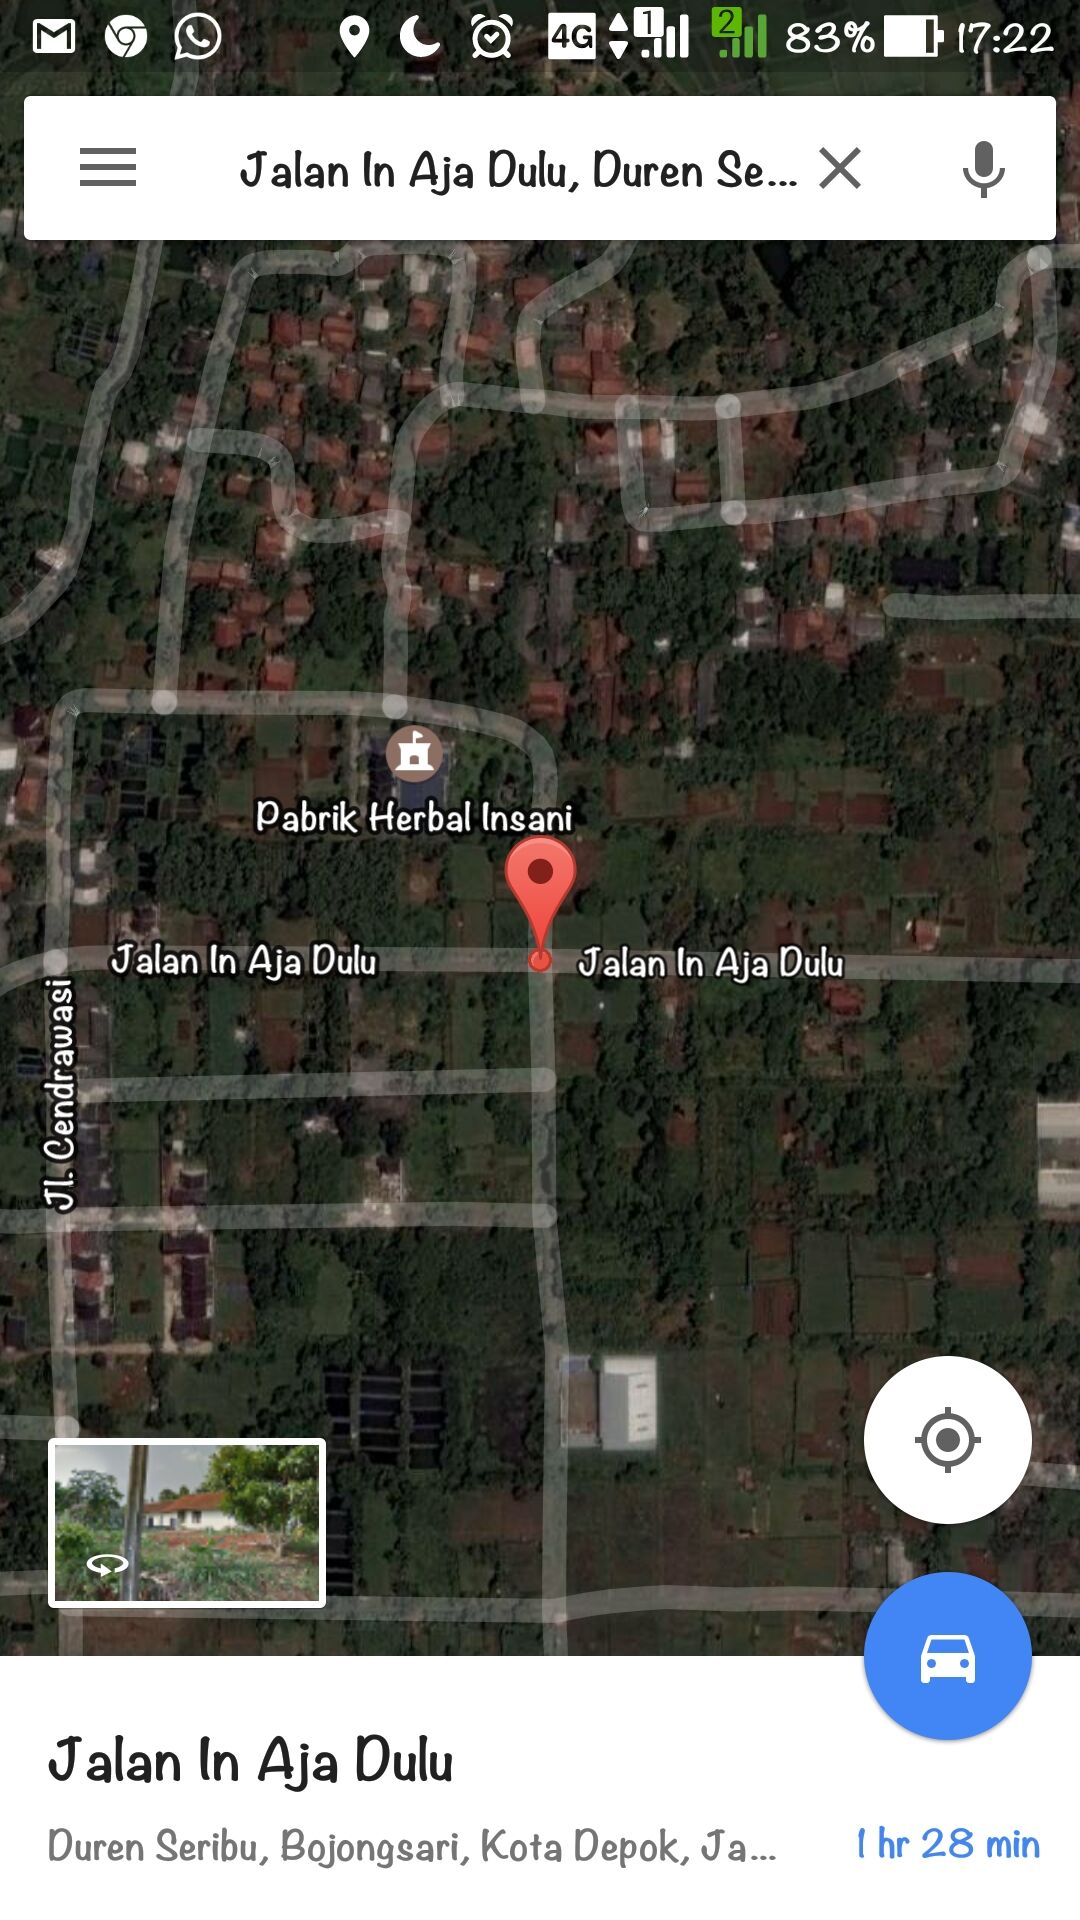 Nama Jalan Aneh Di Google Maps 4